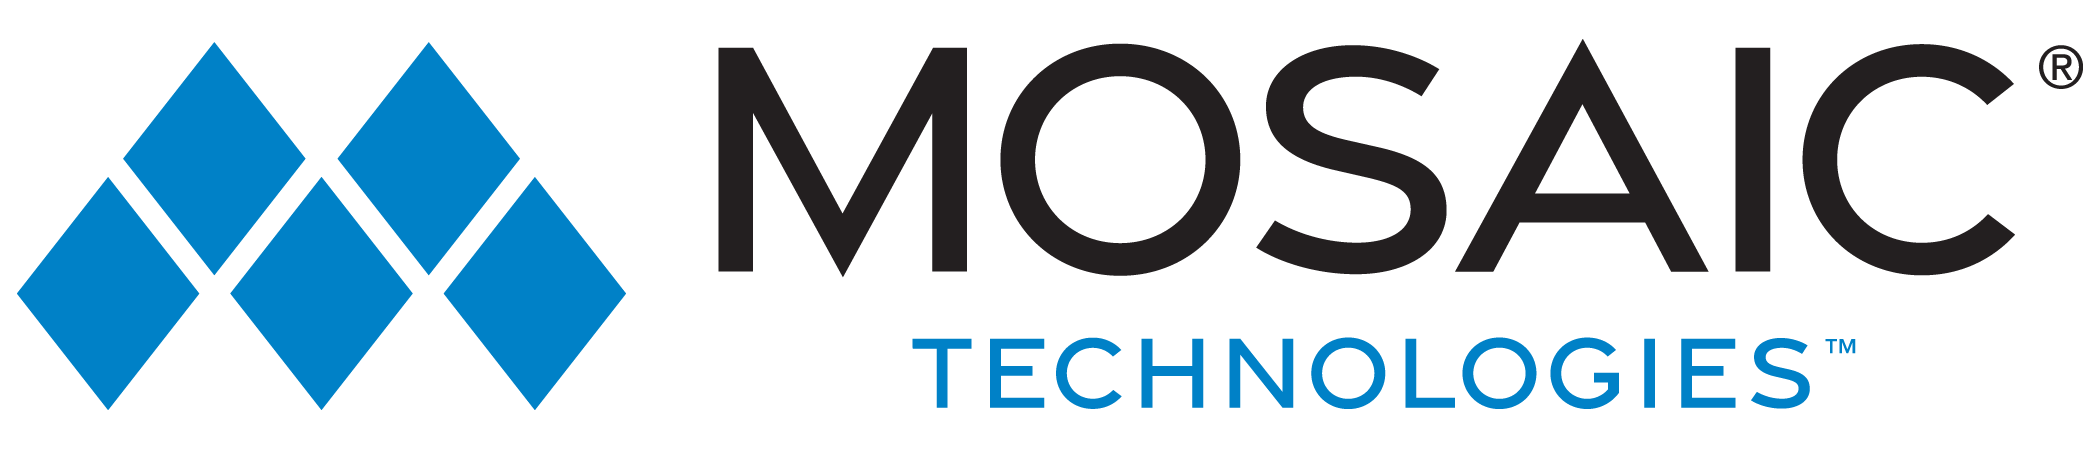 Mosaic Technolgies